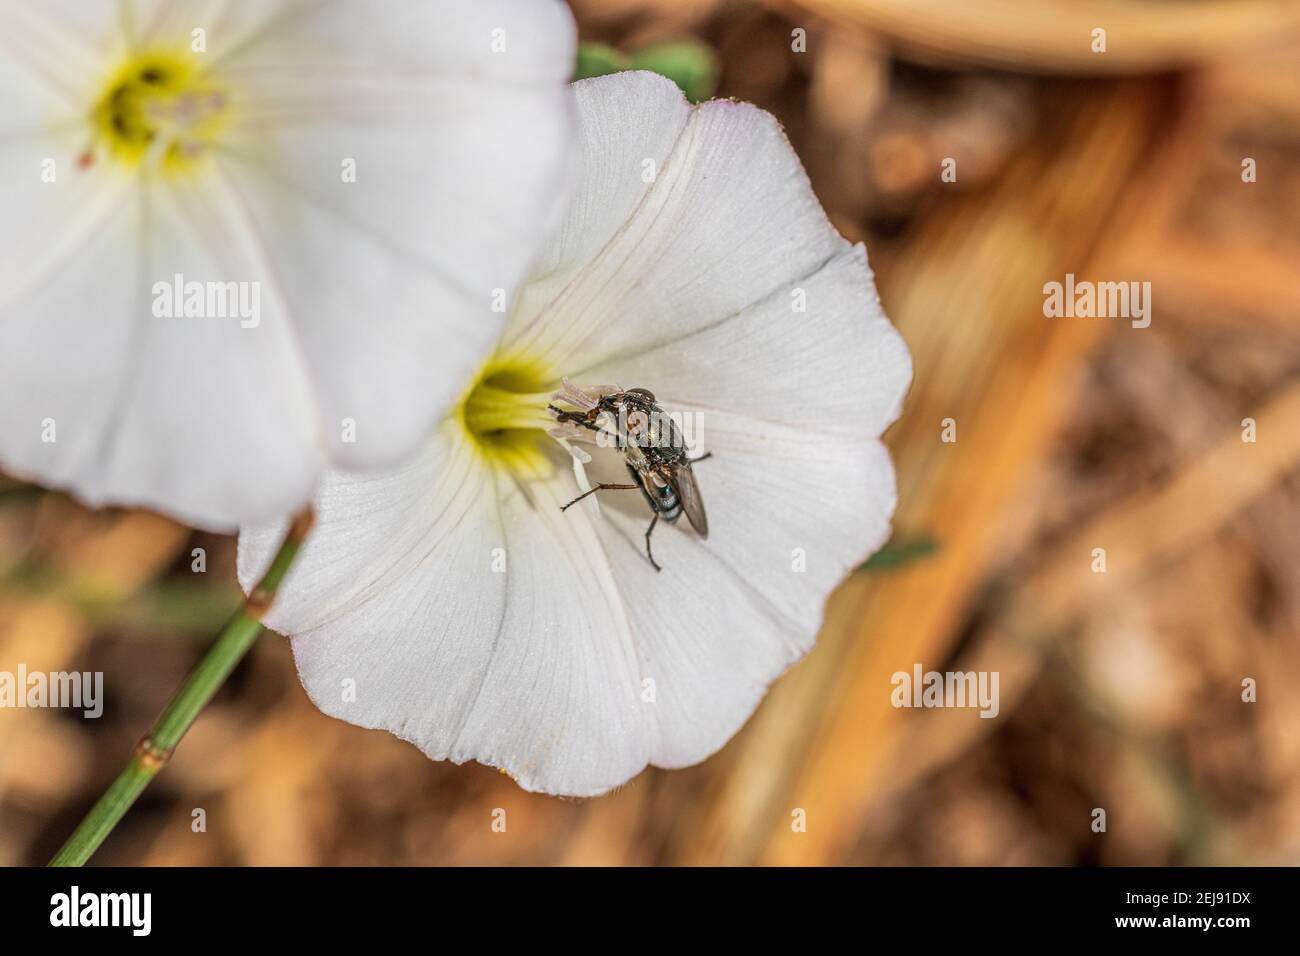 Stomorhina lunata, Female Locust Blowfly on a Flower Stock Photo